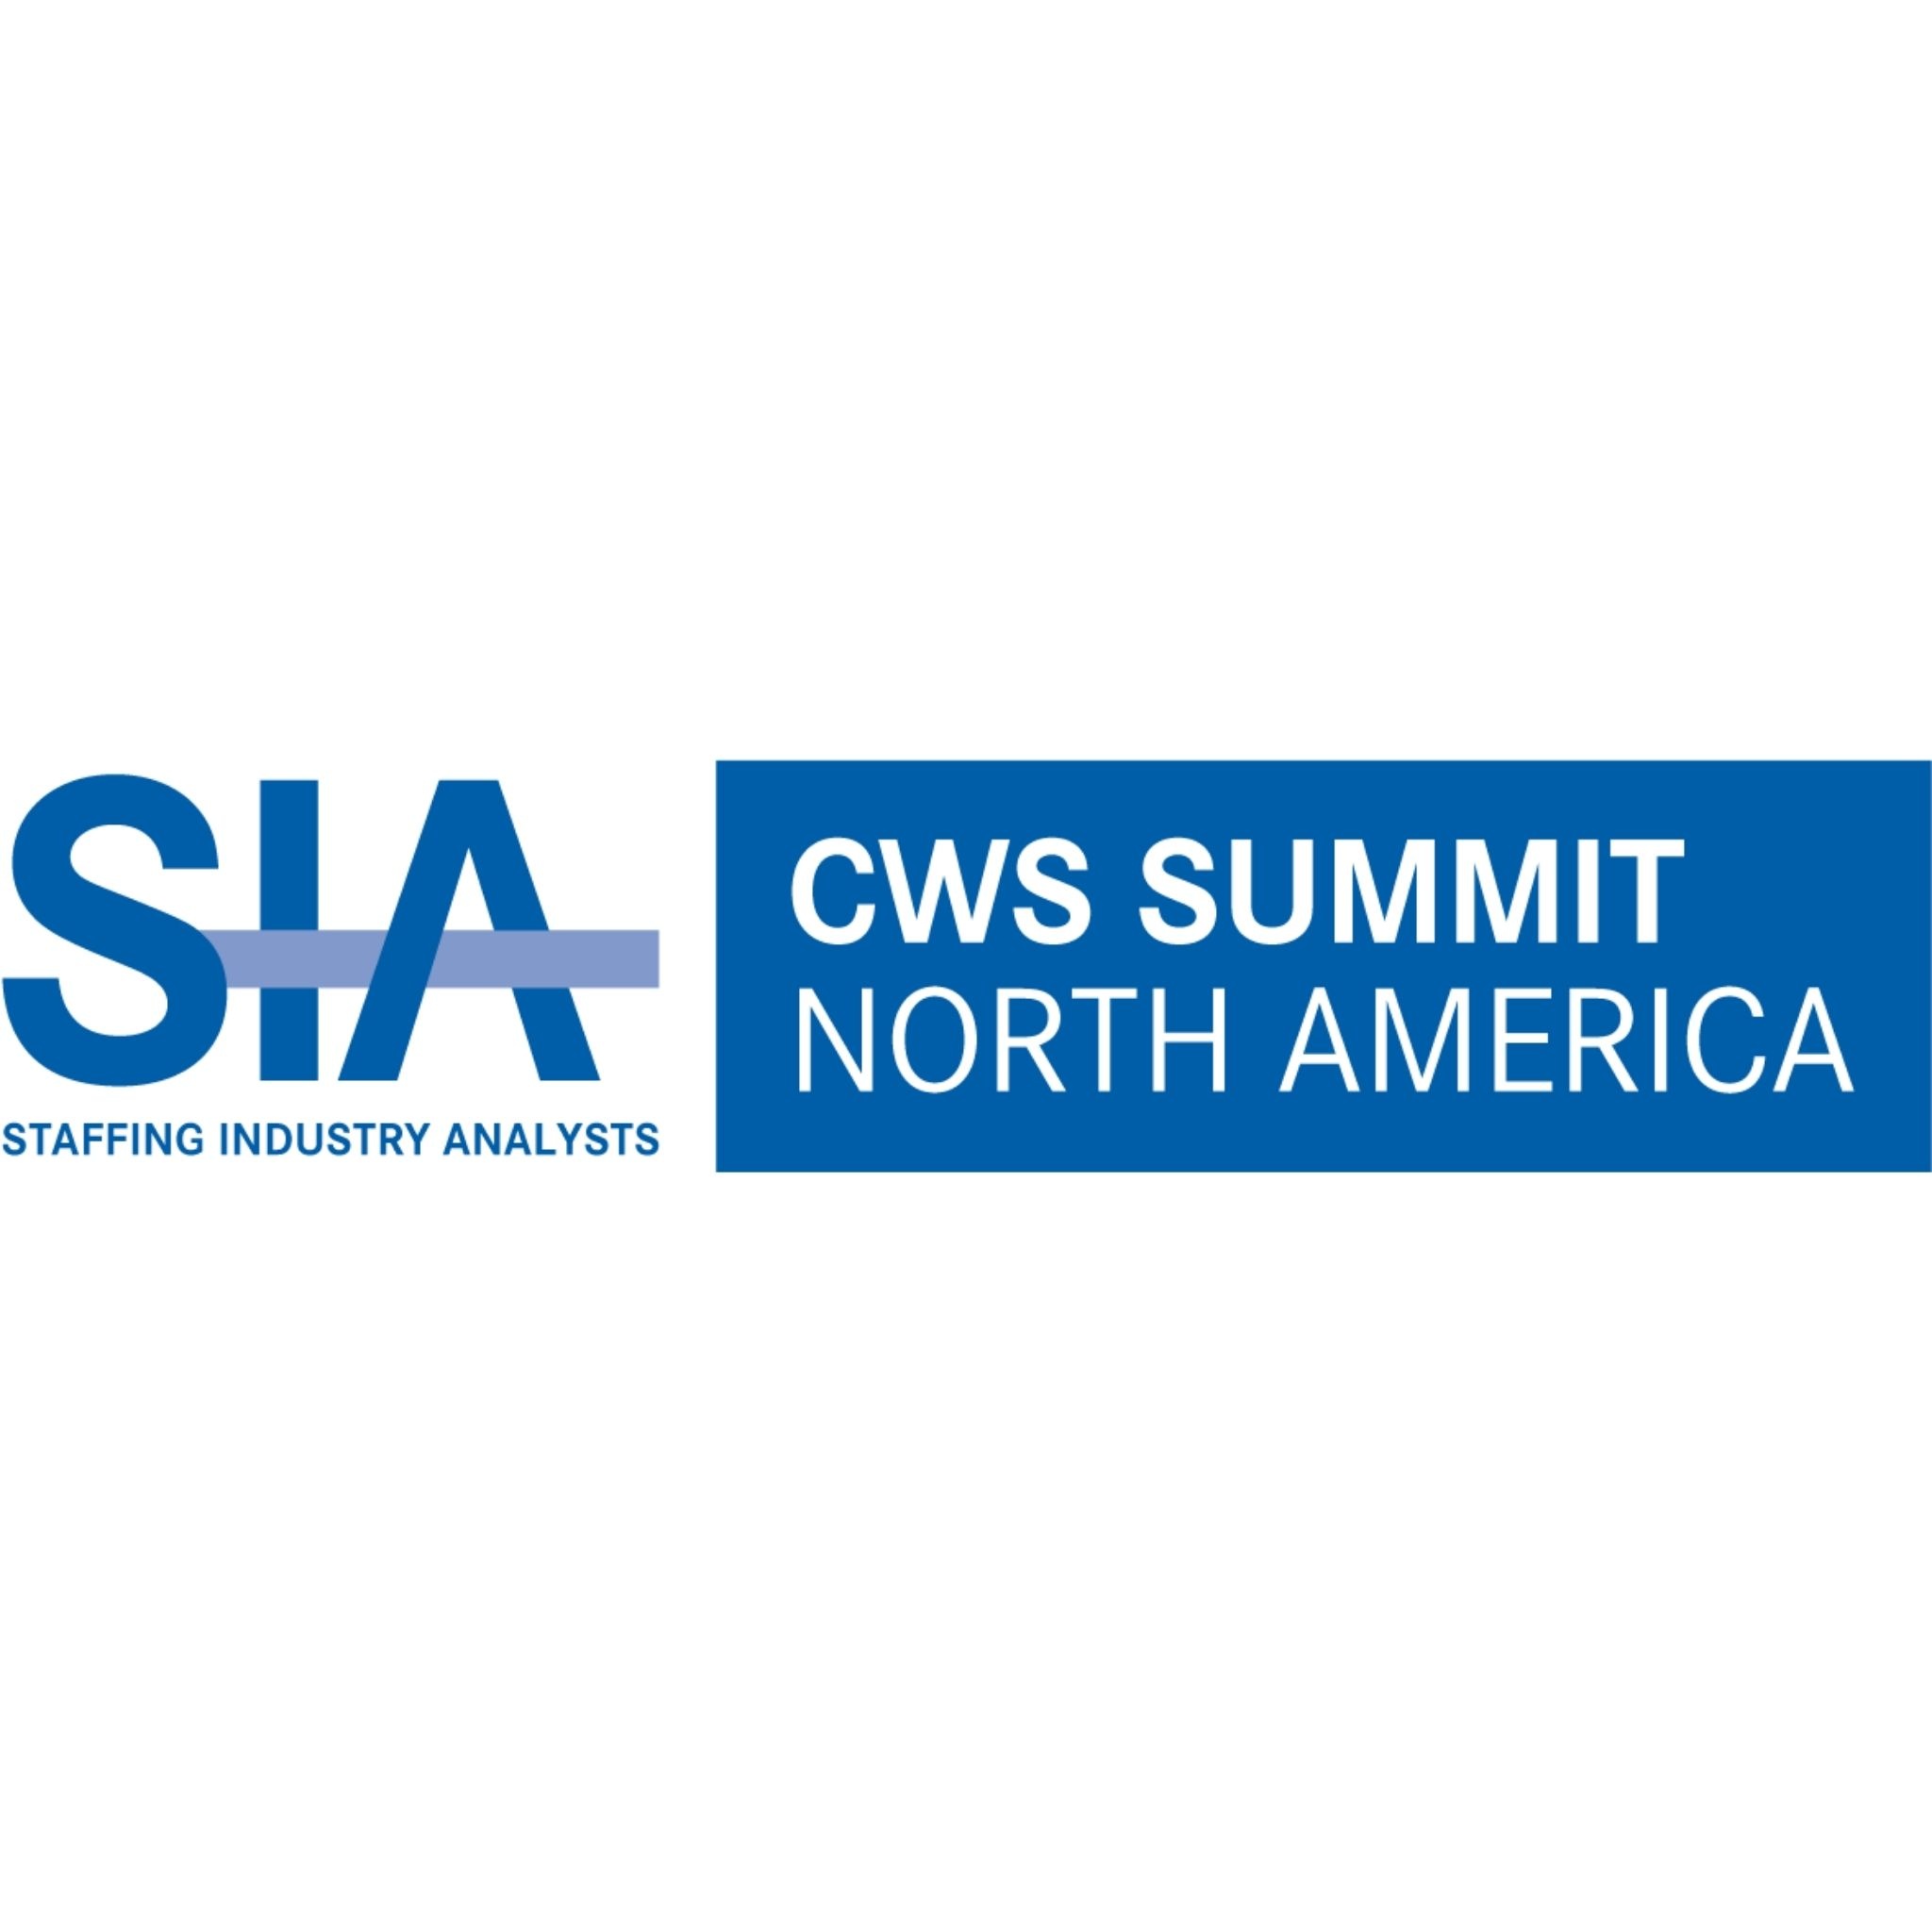 CWS Summit North America 2022 CodeForce 360 America's fastest